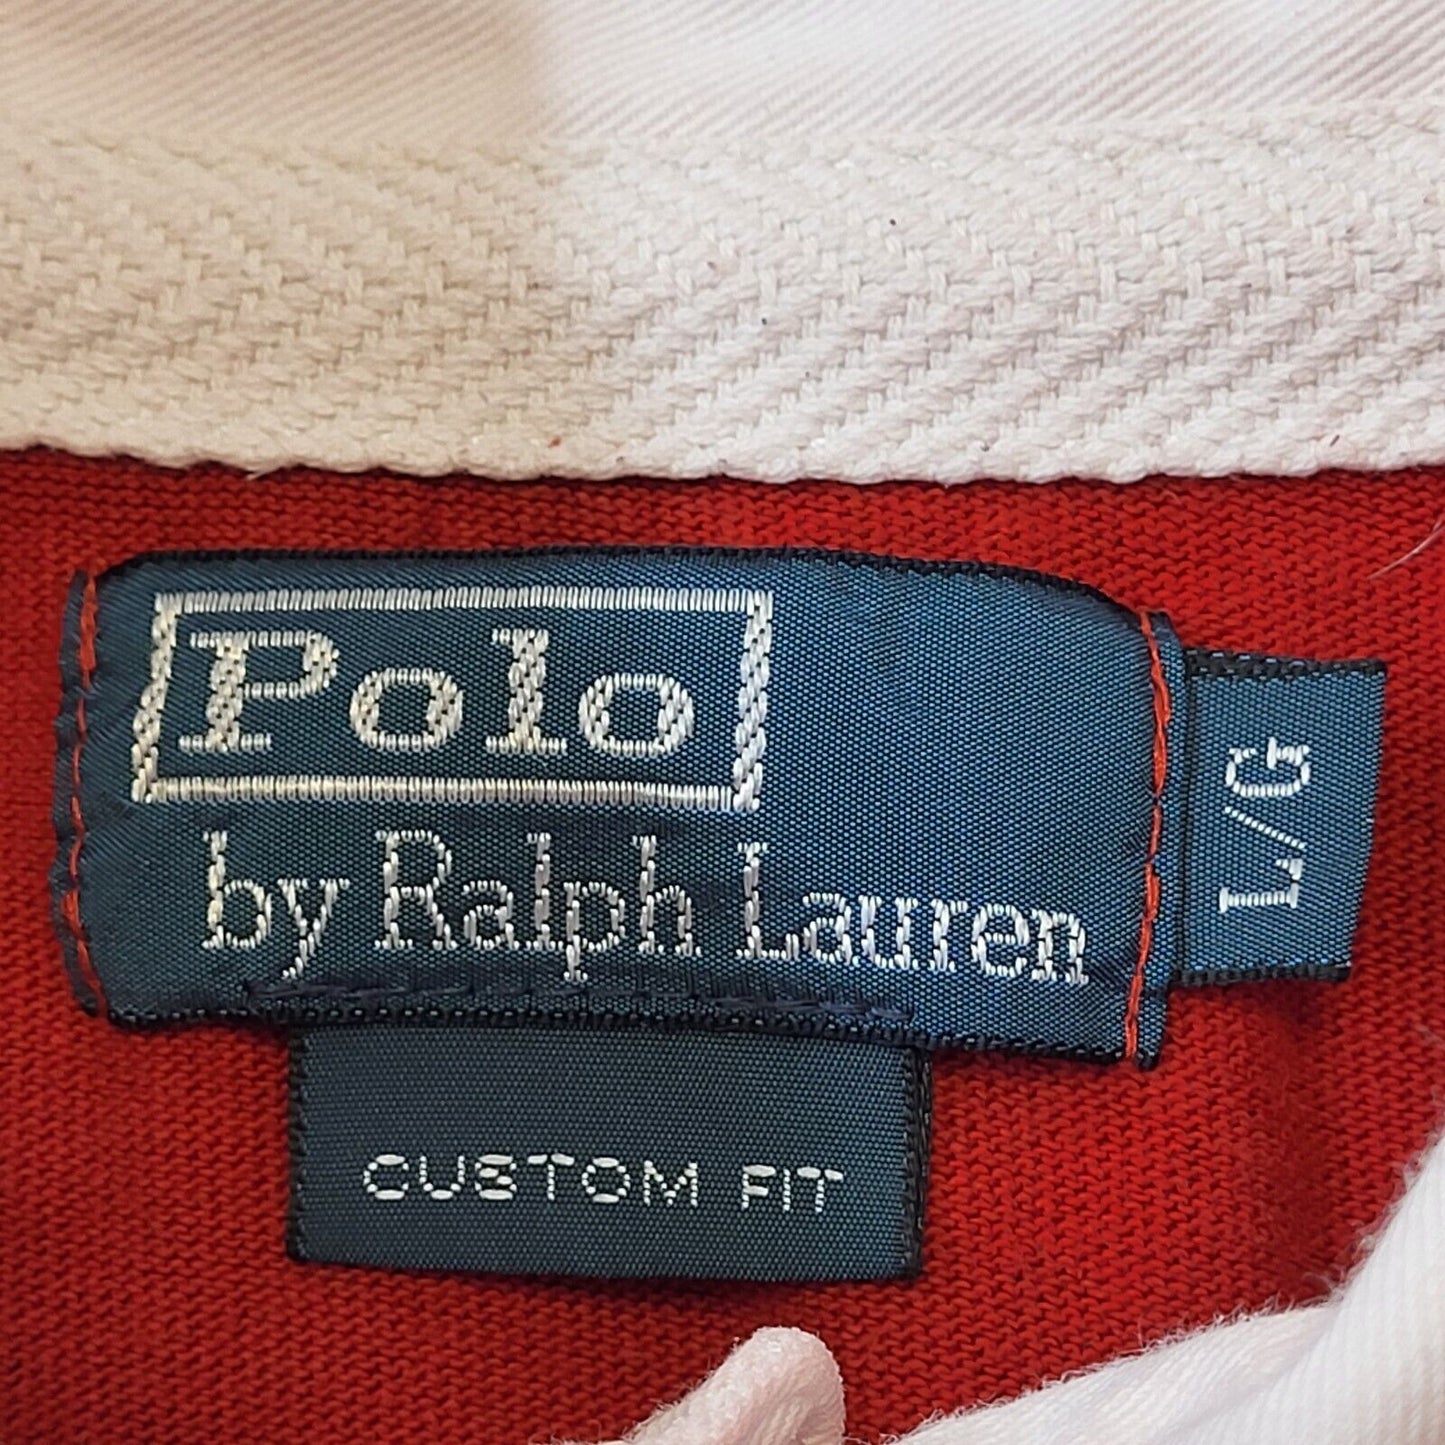 Ralph Lauren Polo (L)